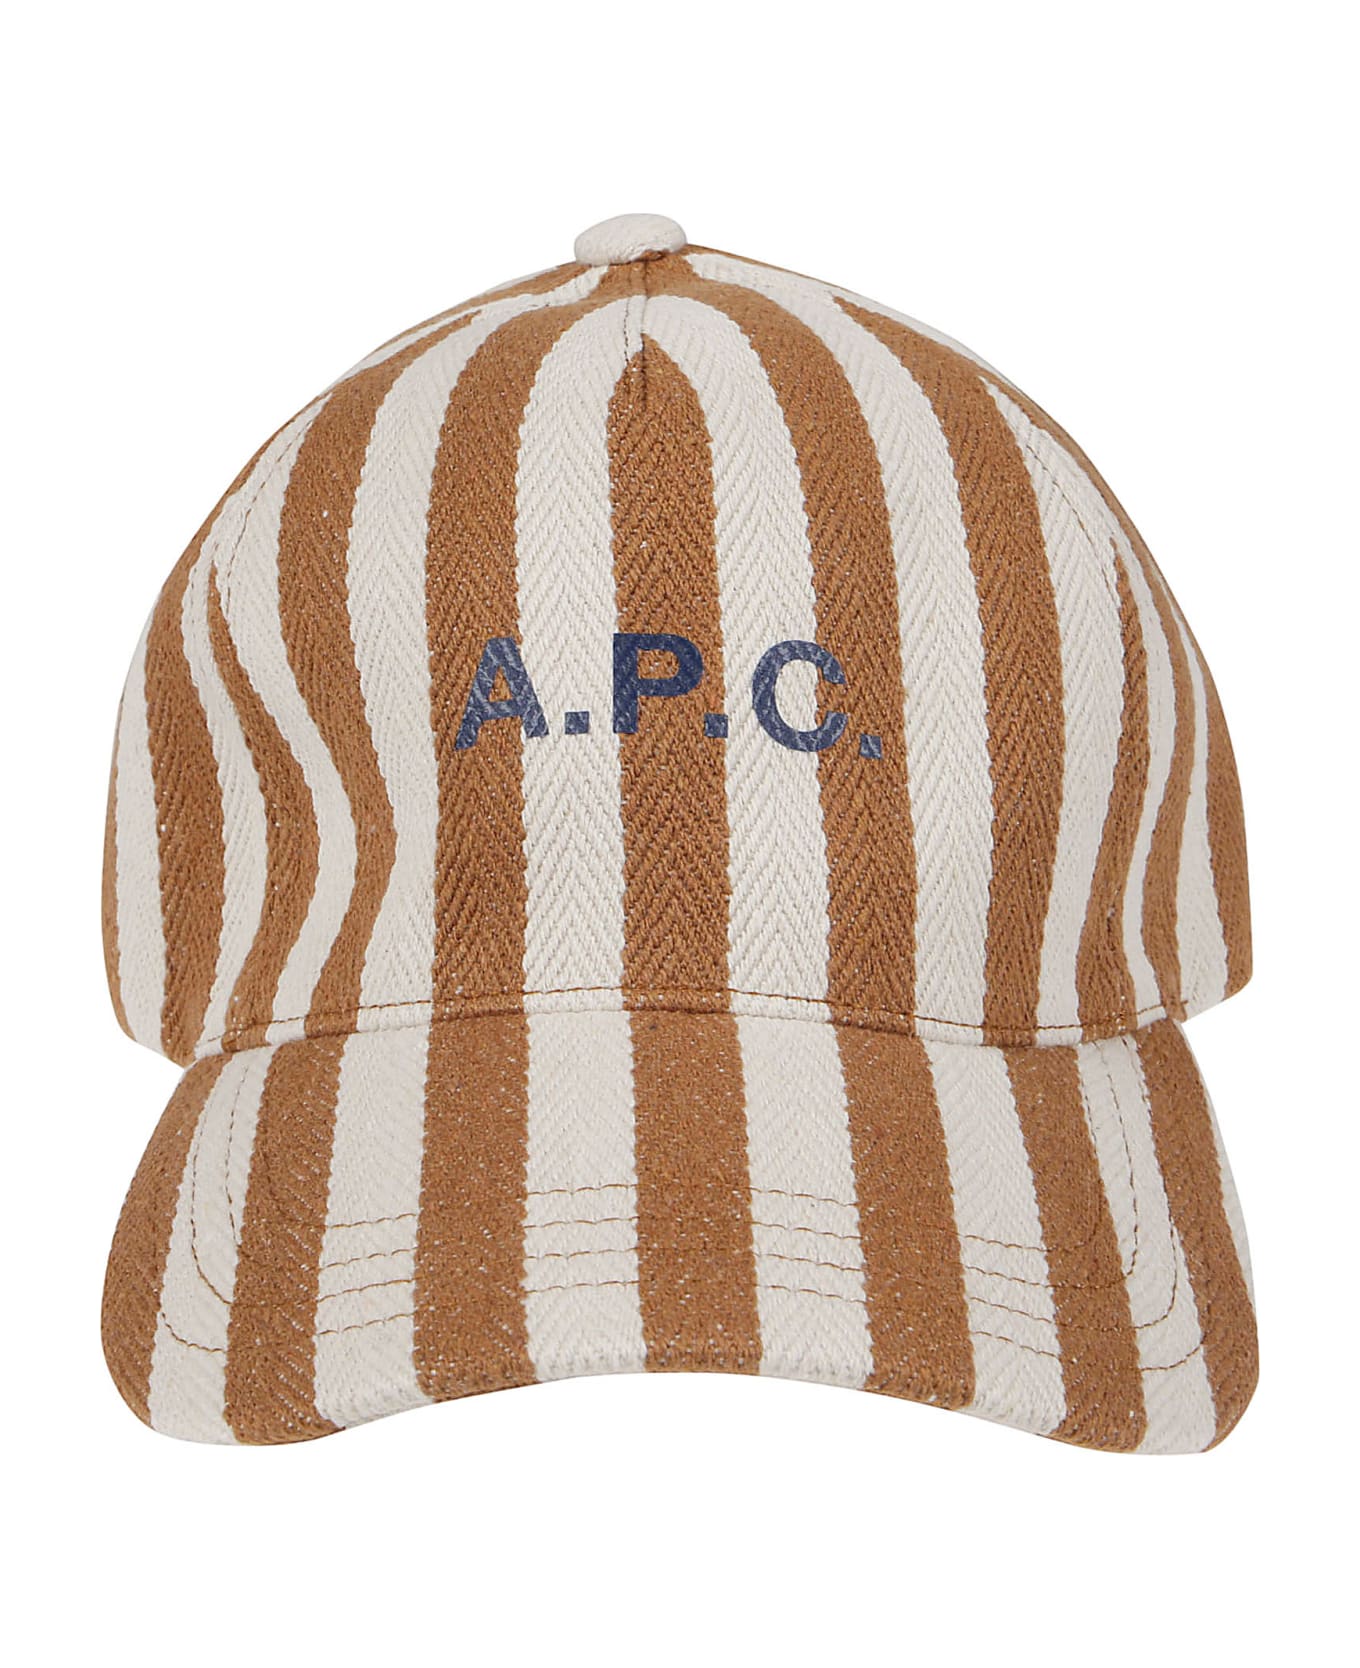 A.P.C. Logo Printed Curved Peak Baseball Cap - Caf Caramel 帽子